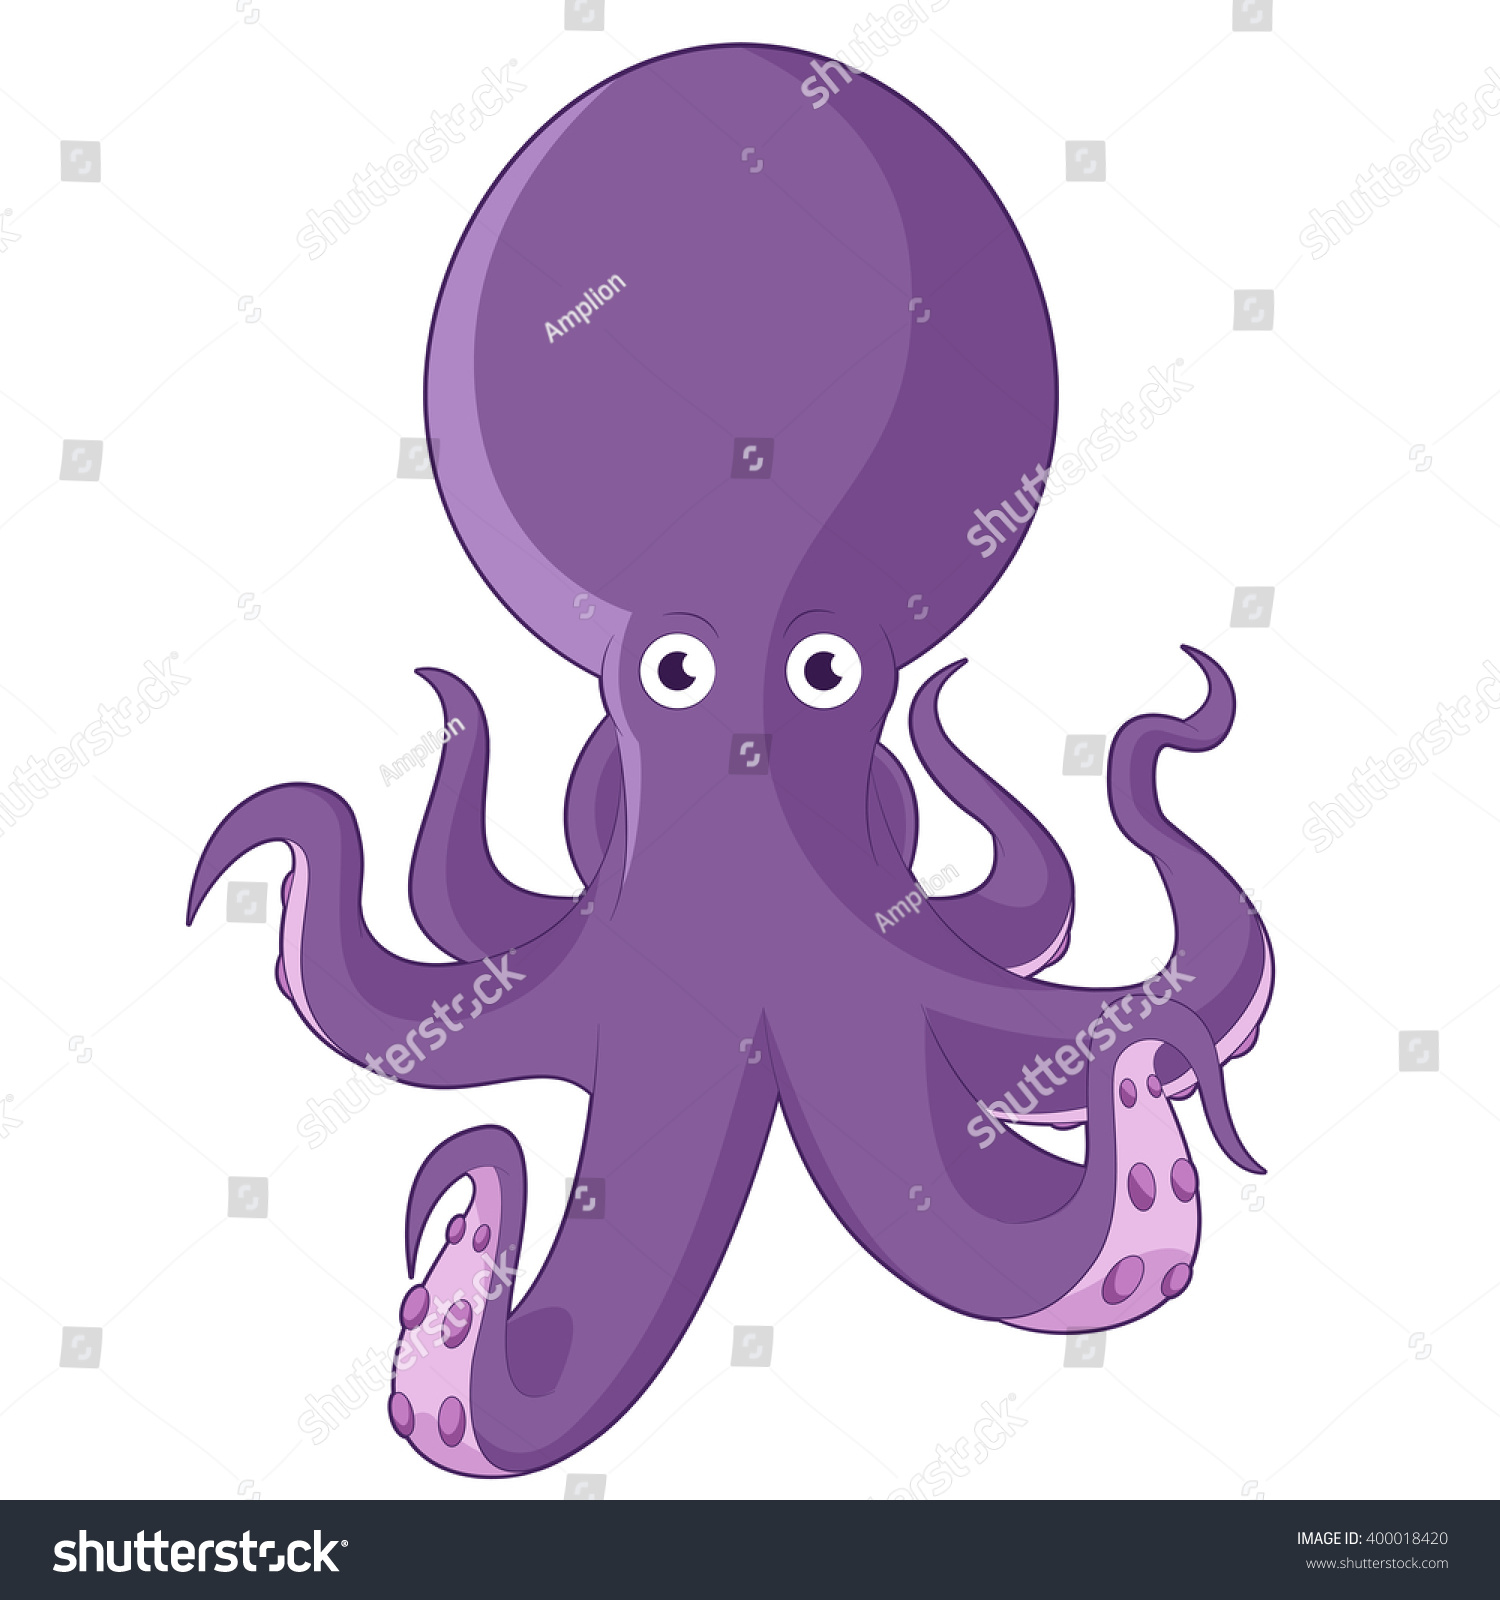 Cartoon Purple Octopus เวกเตอร์สต็อก 400018420 - Shutterstock